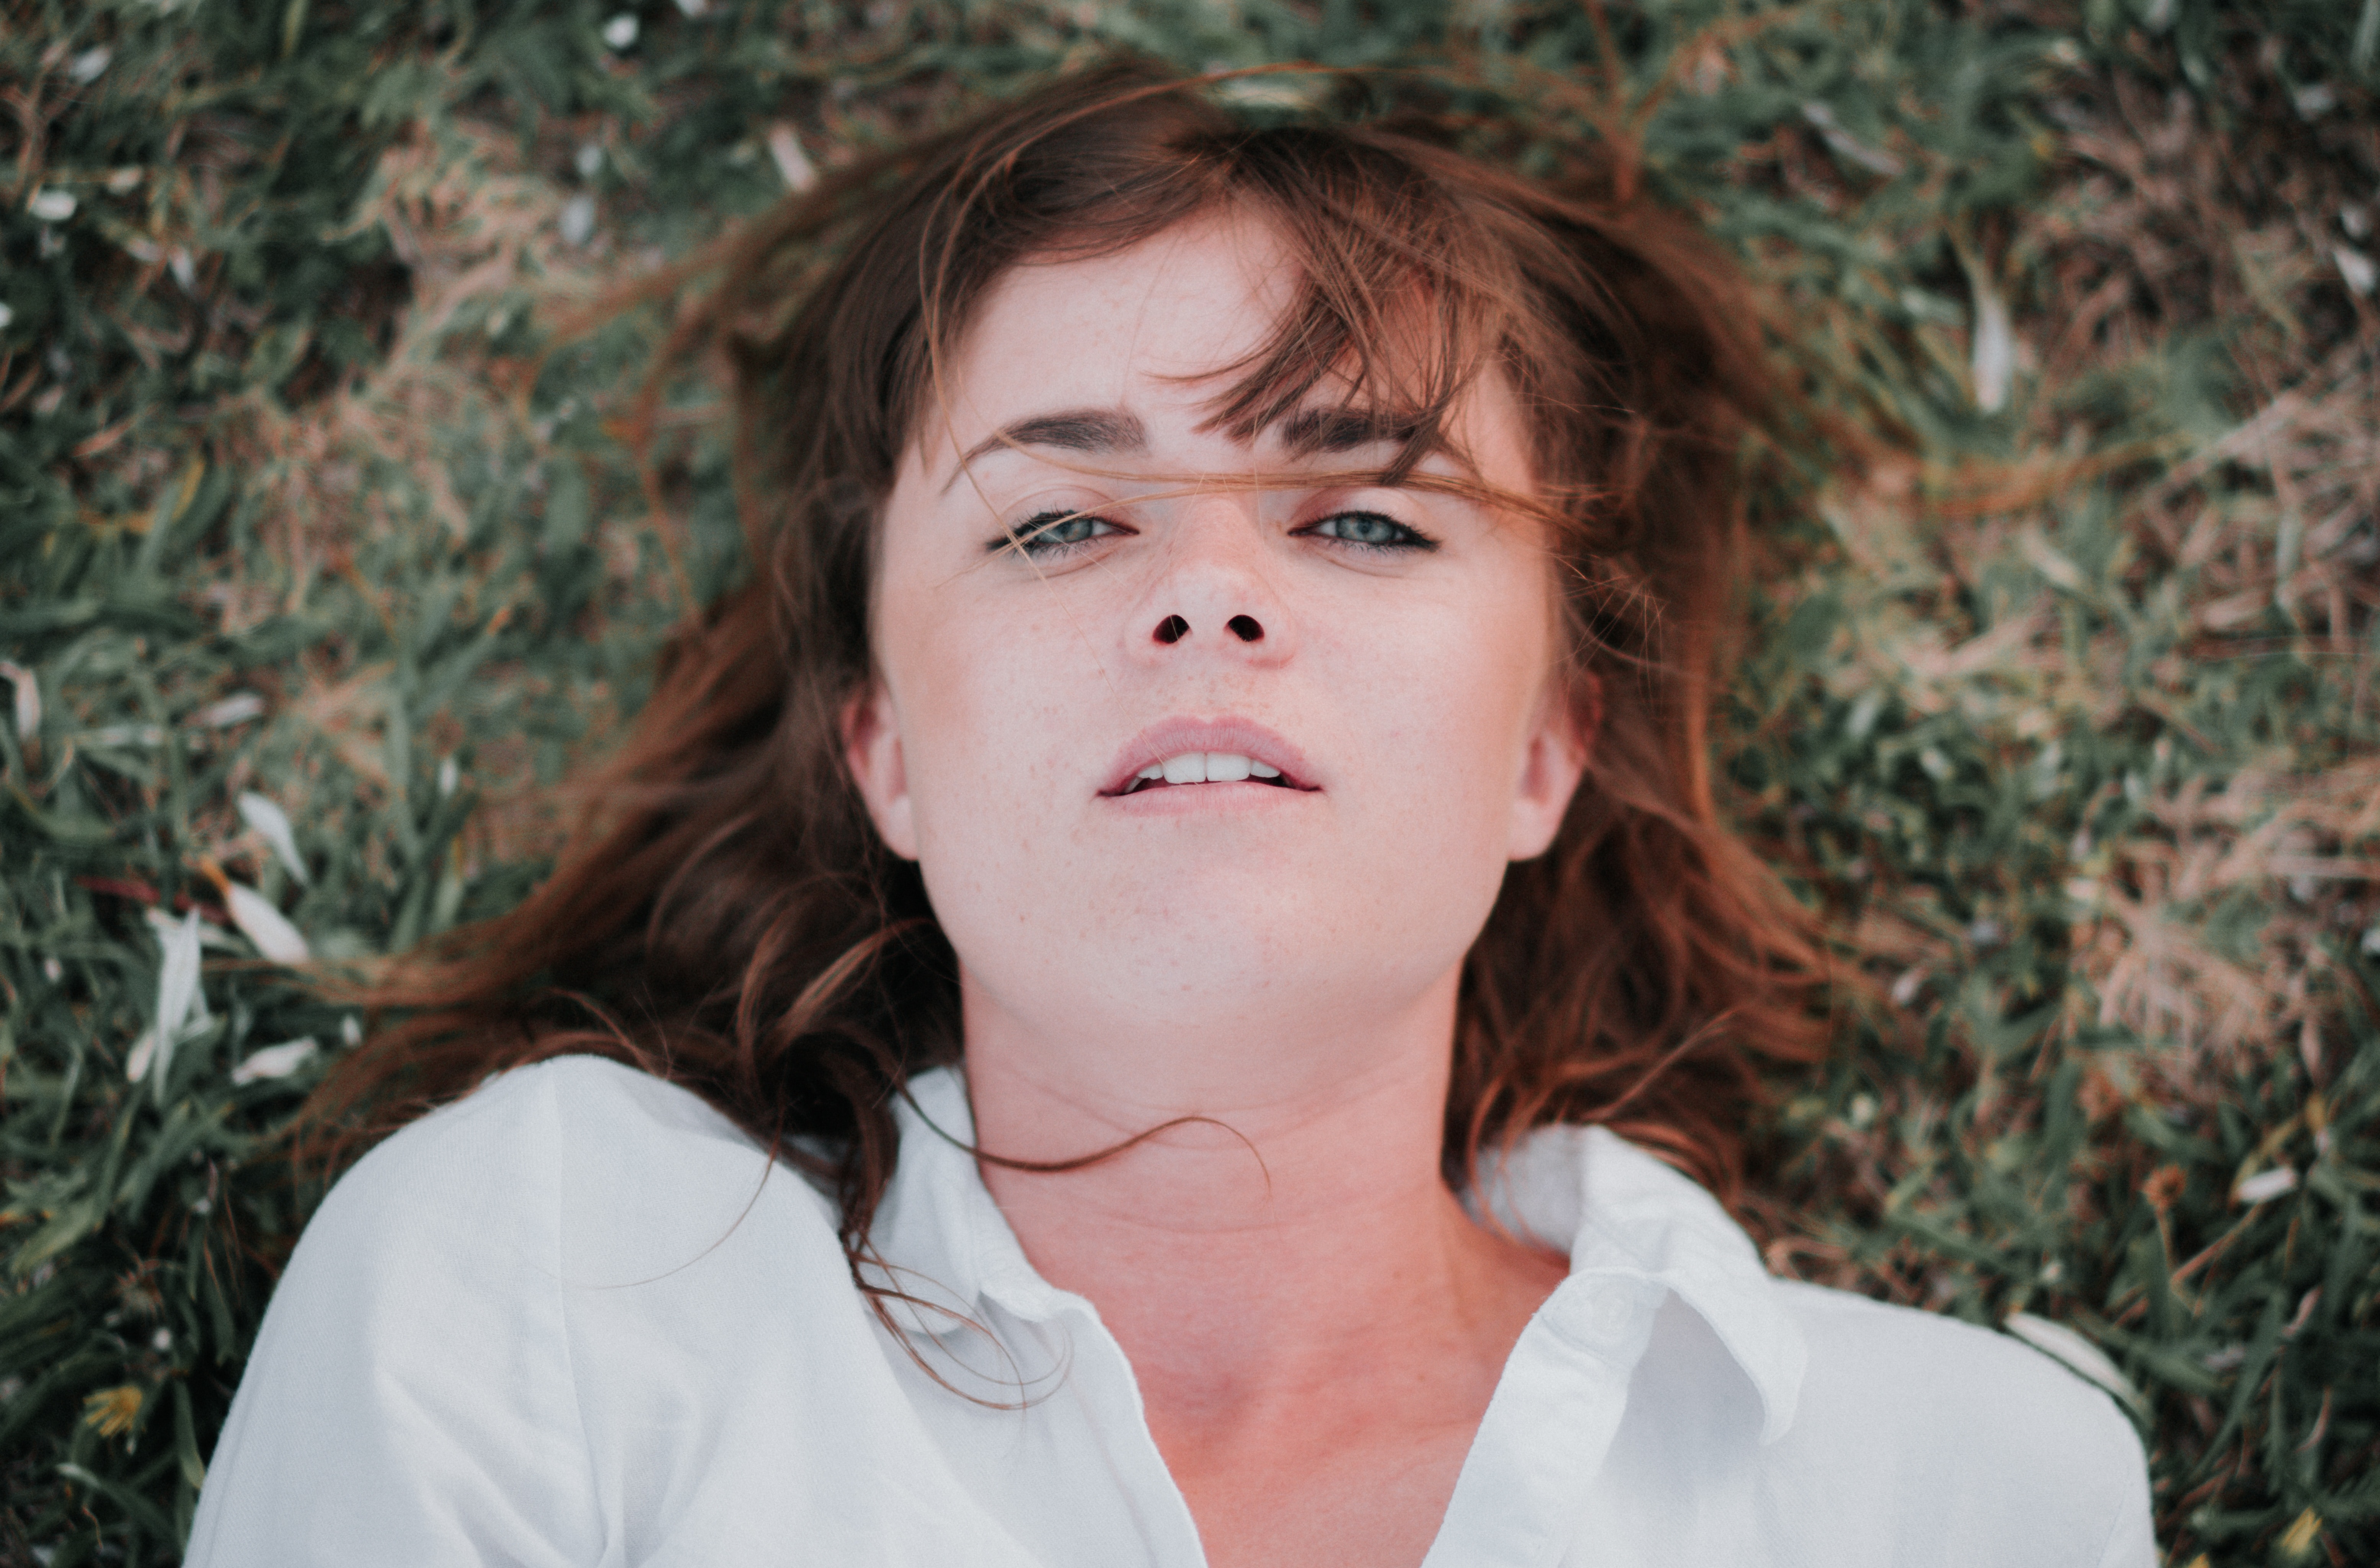 woman wearing white button up shirt lying on grass